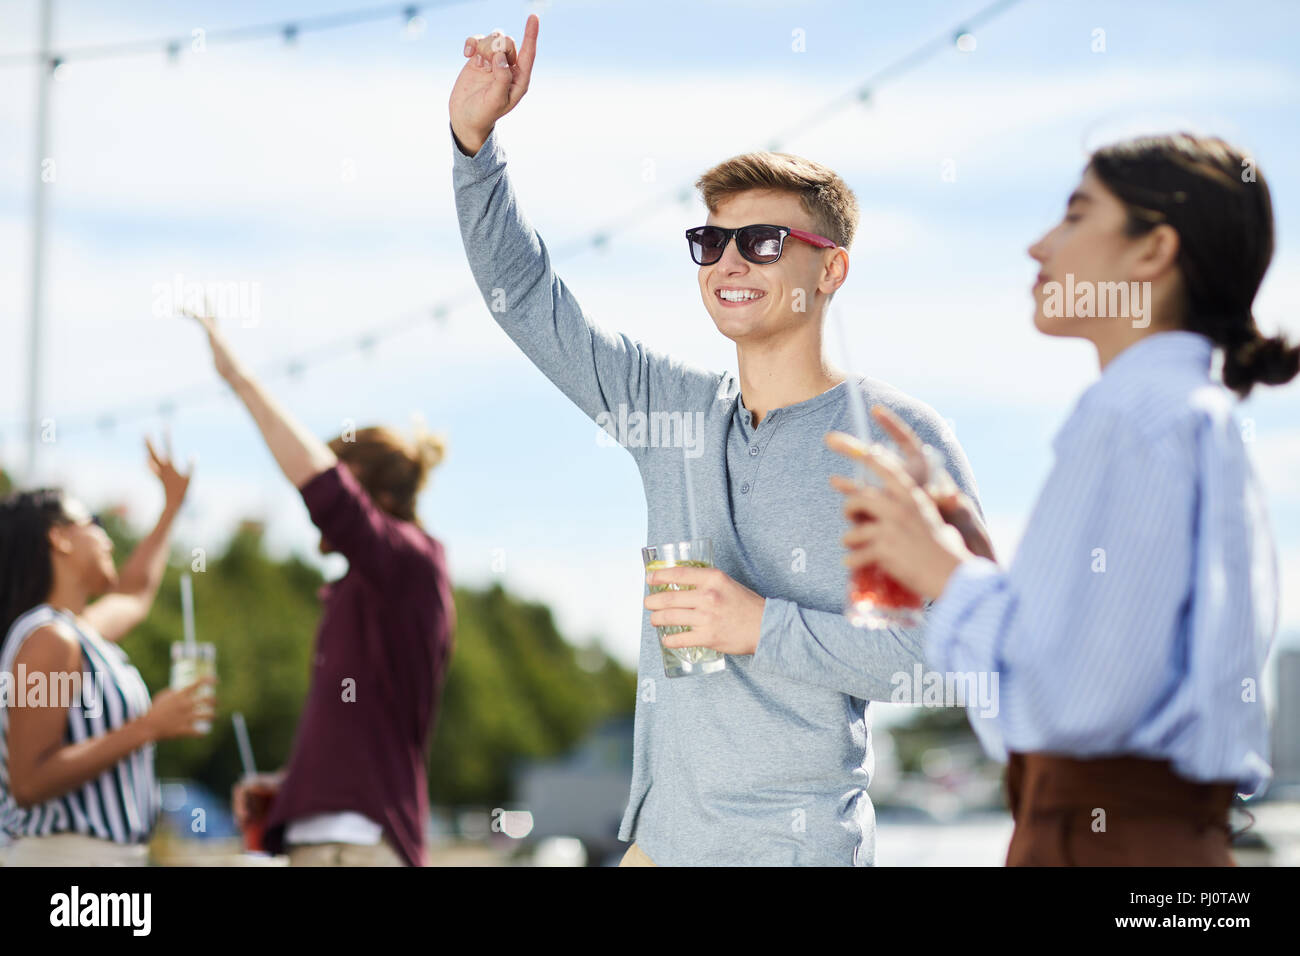 Guy dancing Stock Photo